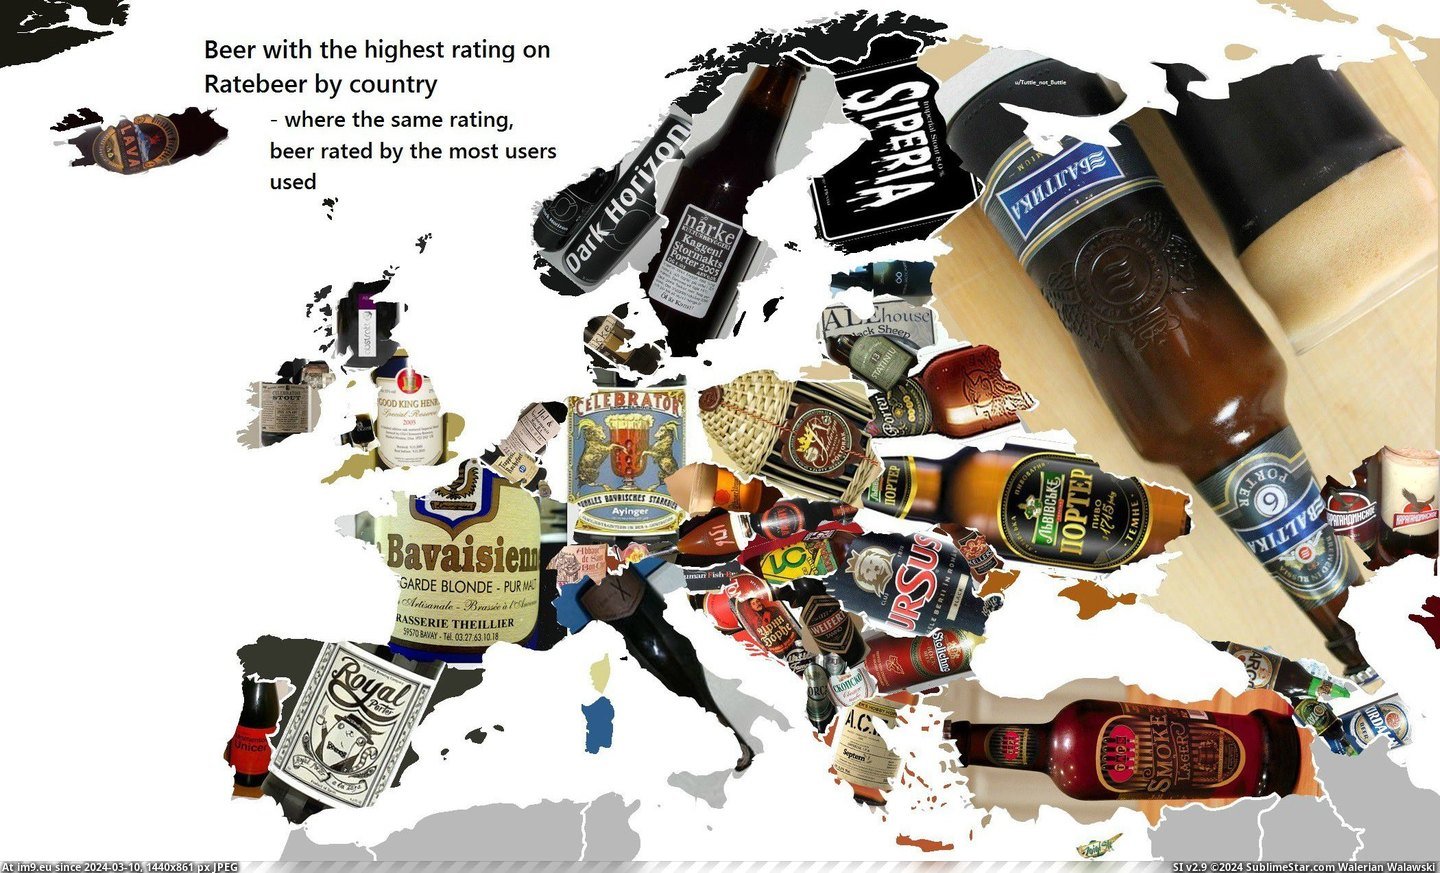 #Com #European #Highest #Beers #Ratebeer #Country #Rated [Mapporn] Highest rated beers on ratebeer.com, by European country [2100x1268] [OC] Pic. (Bild von album My r/MAPS favs))